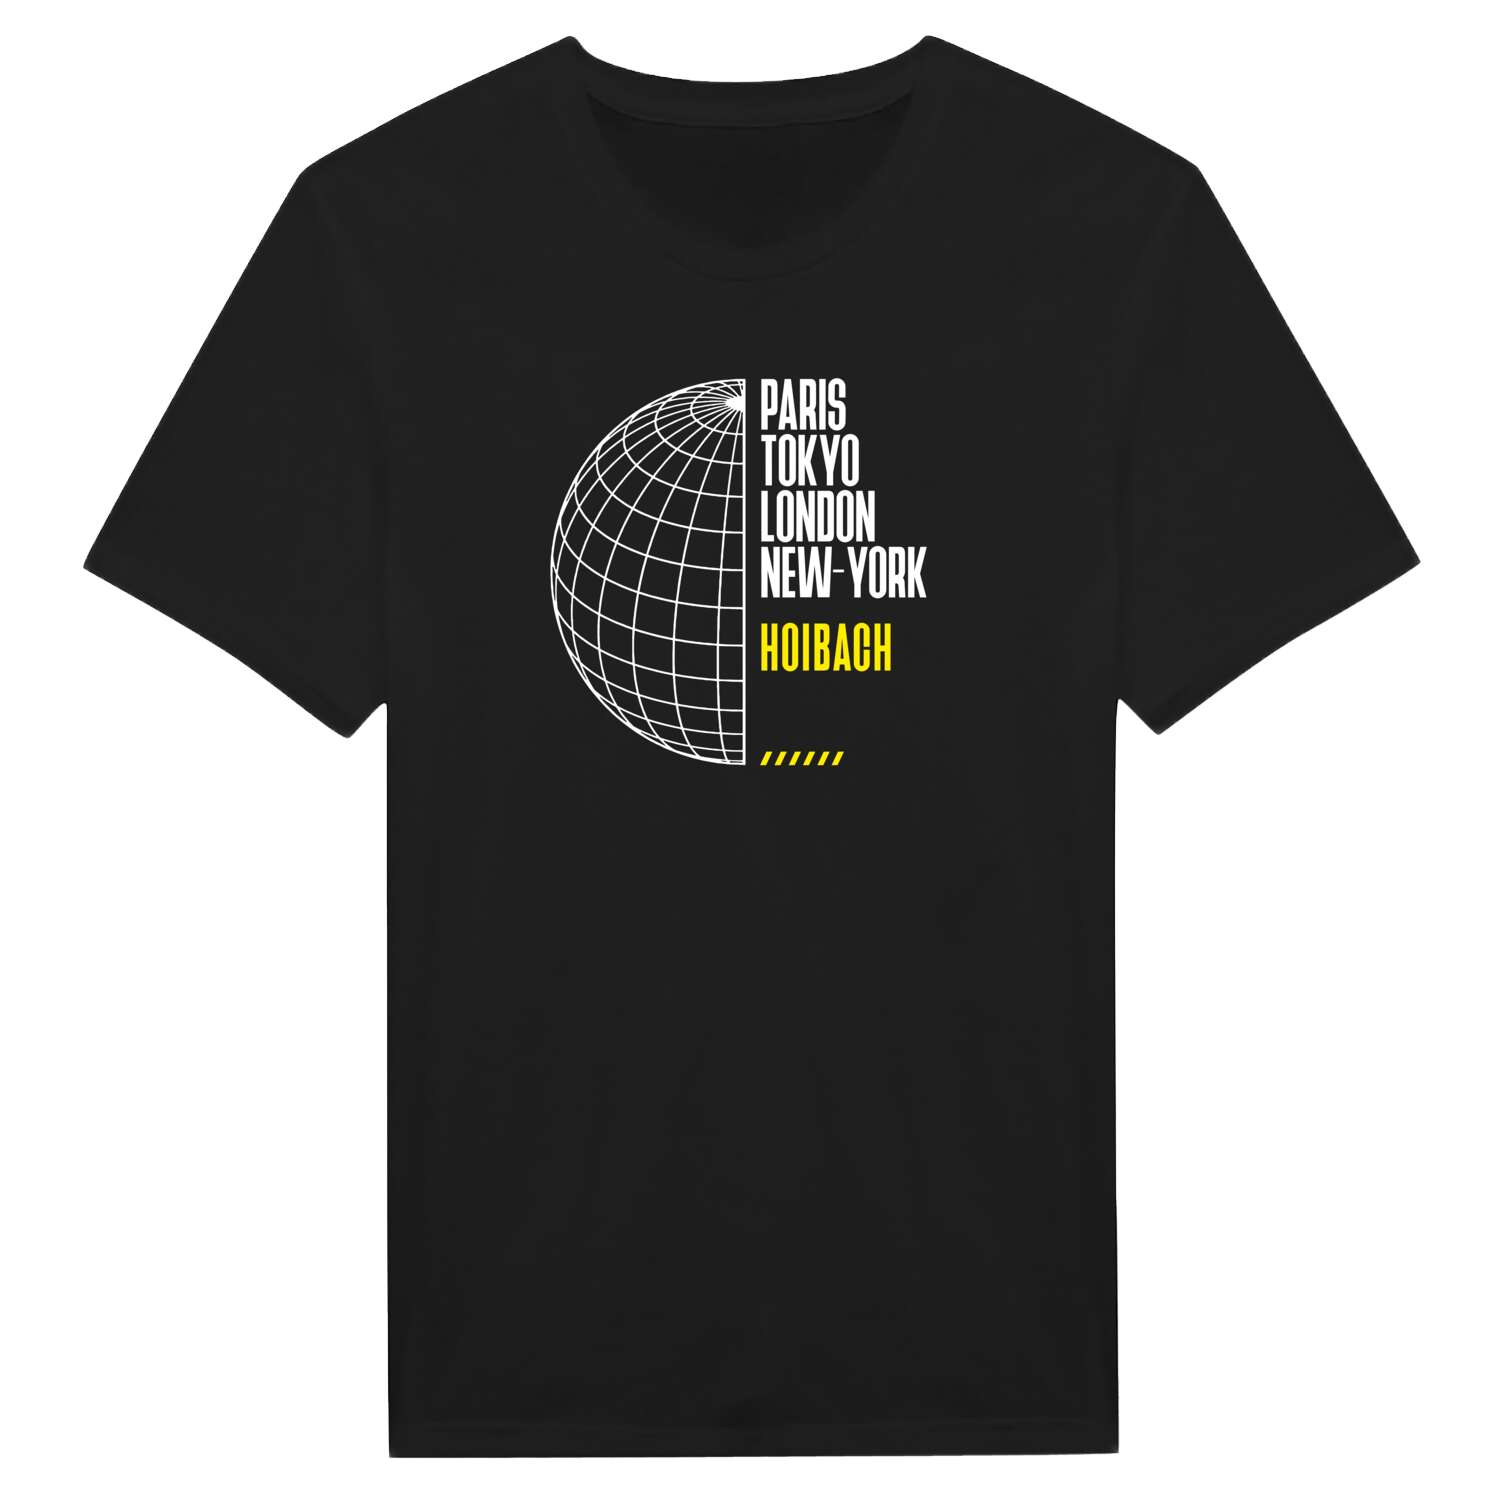 Hoibach T-Shirt »Paris Tokyo London«